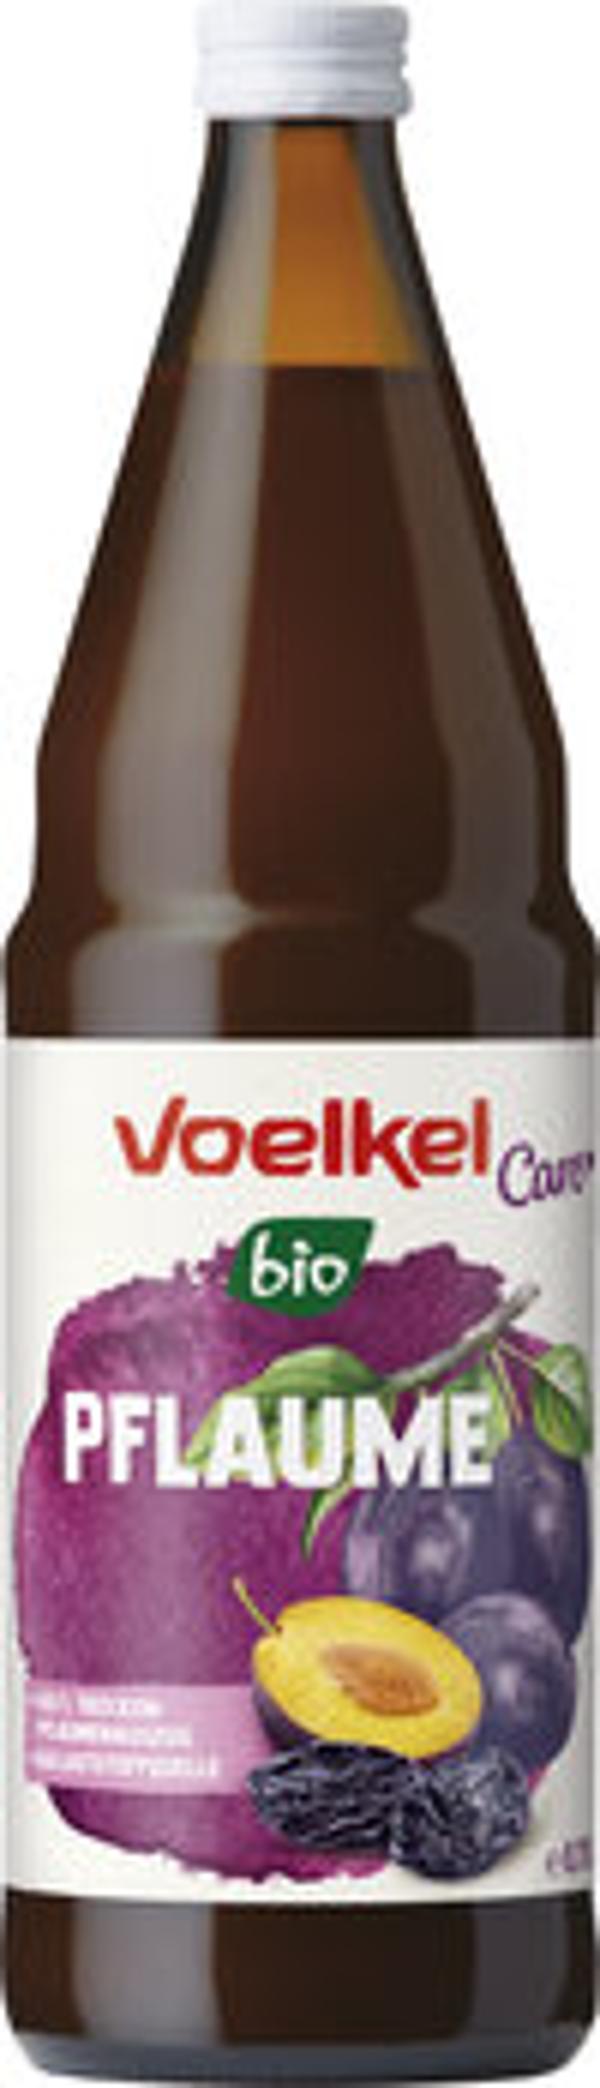 Produktfoto zu Voelkel Care Pflaume, 100% Trockenpflaumenauszug 0,75l